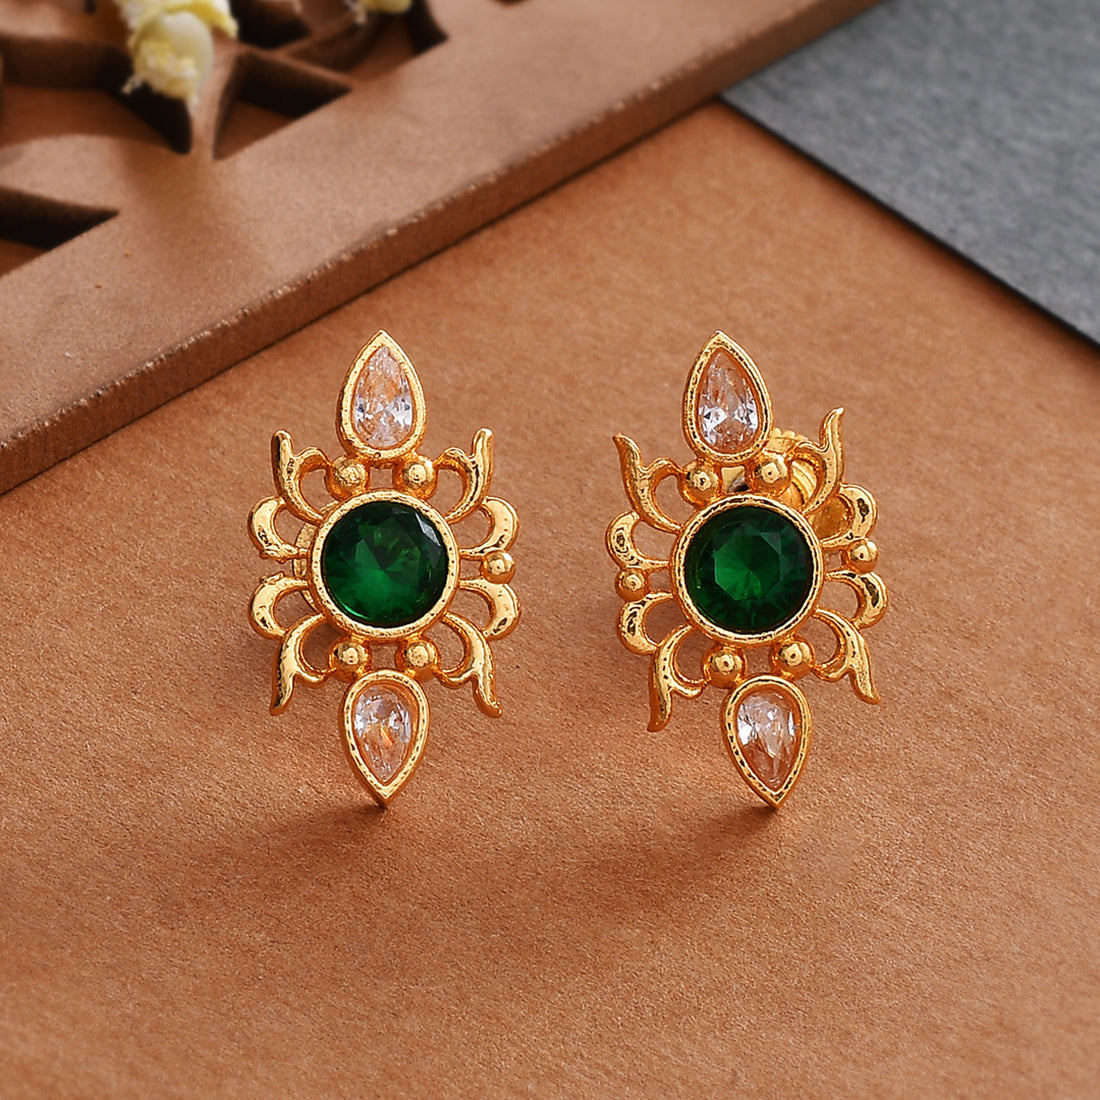 Incredible Chinese Silver Enamel Green Stone Dangle Earrings WOW - Ruby Lane